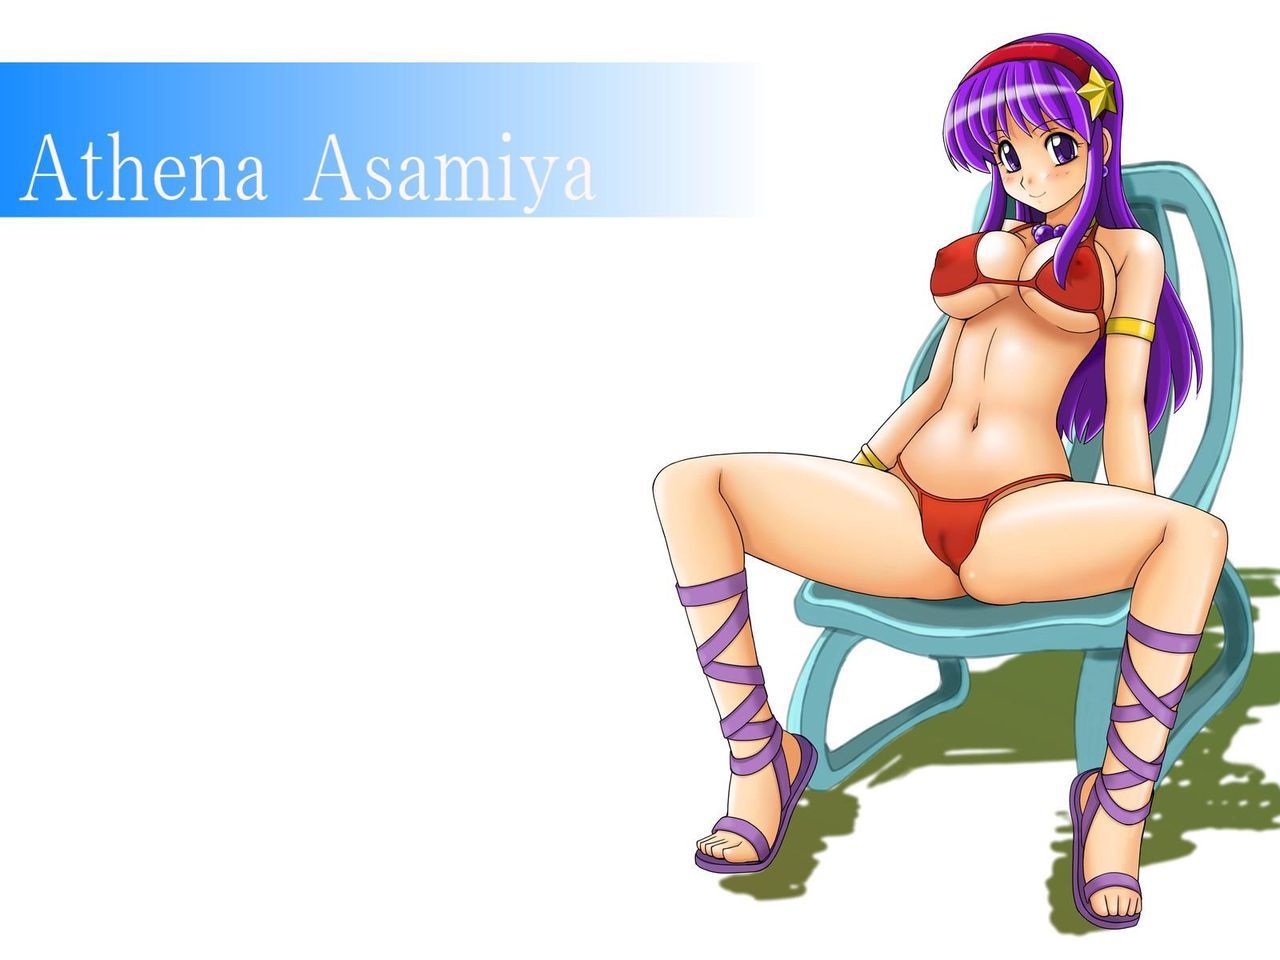 [60 pictures] Asamiya Athena KOF hentai pictures! Part 2 39